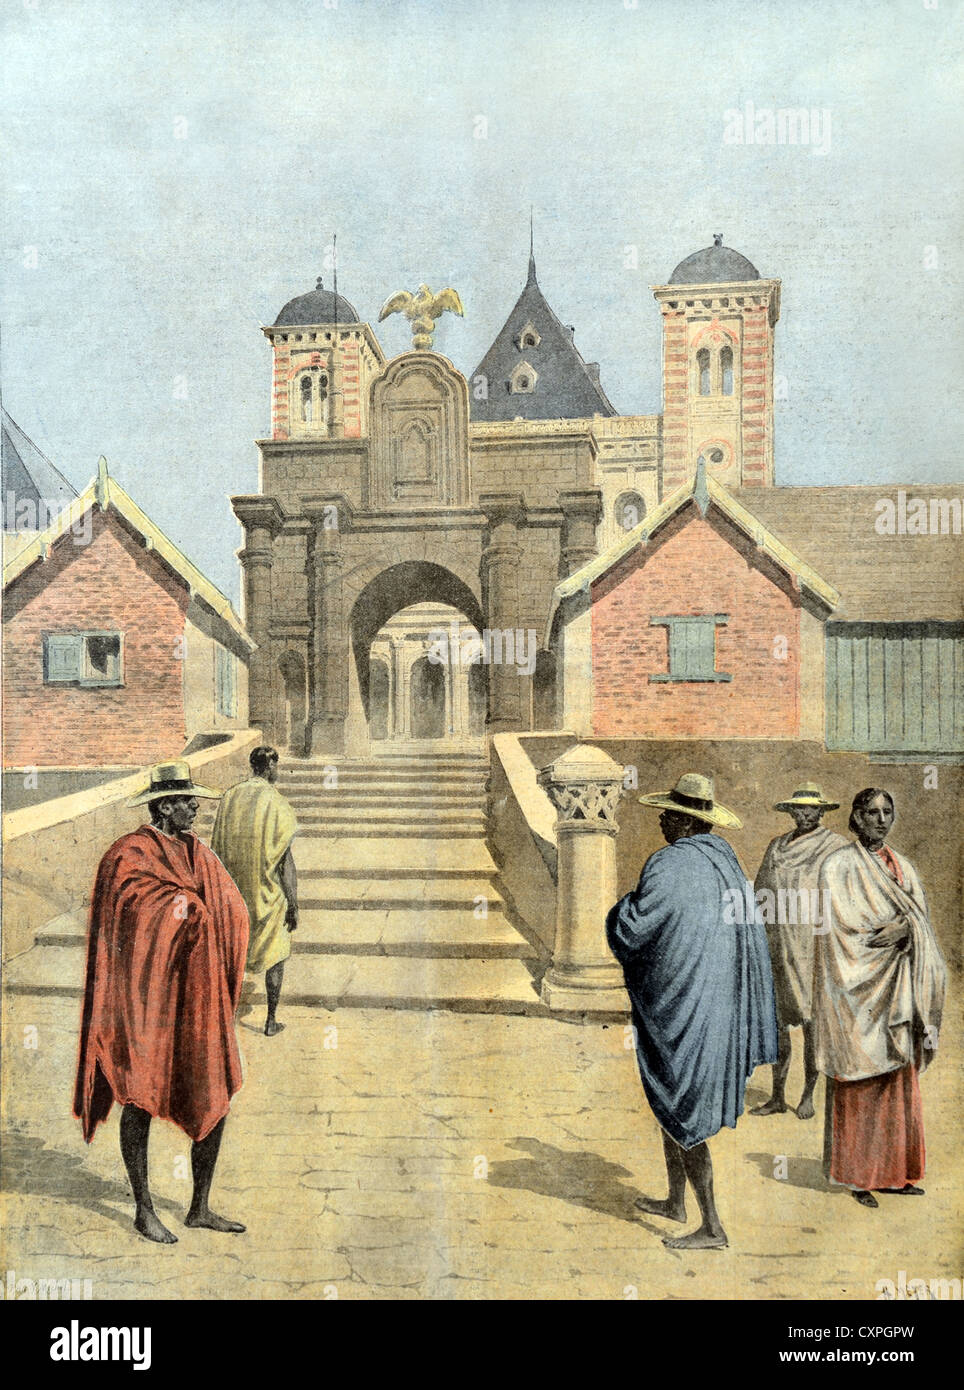 Königspalast oder Rova von Antananarivo und Malagasy vor dem Hauptpalasttor Antananarivo Madagaskar (1895) Historische oder alte Gravur oder Illustration Stockfoto